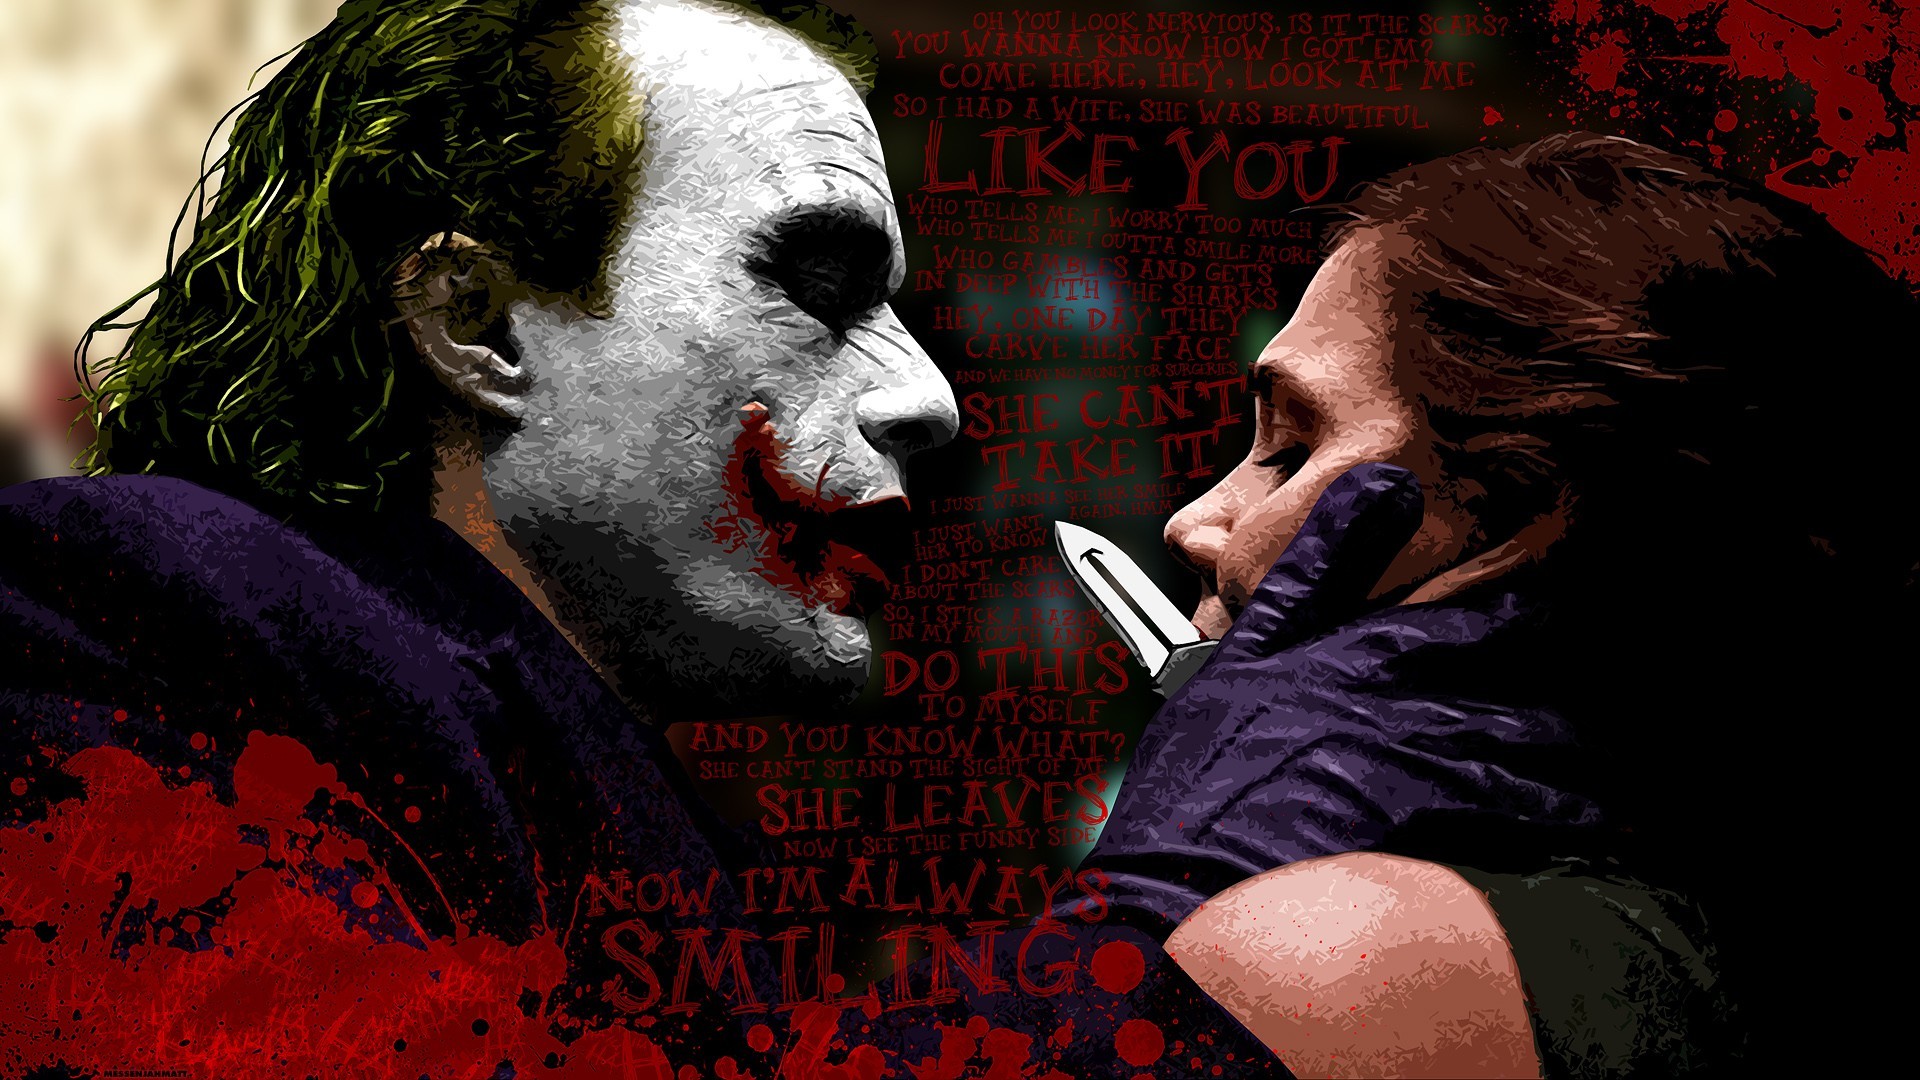 General 1920x1080 Joker The Dark Knight typography Batman blood stains Maggie Gyllenhaal knife MessenjahMatt movies American women villains artwork